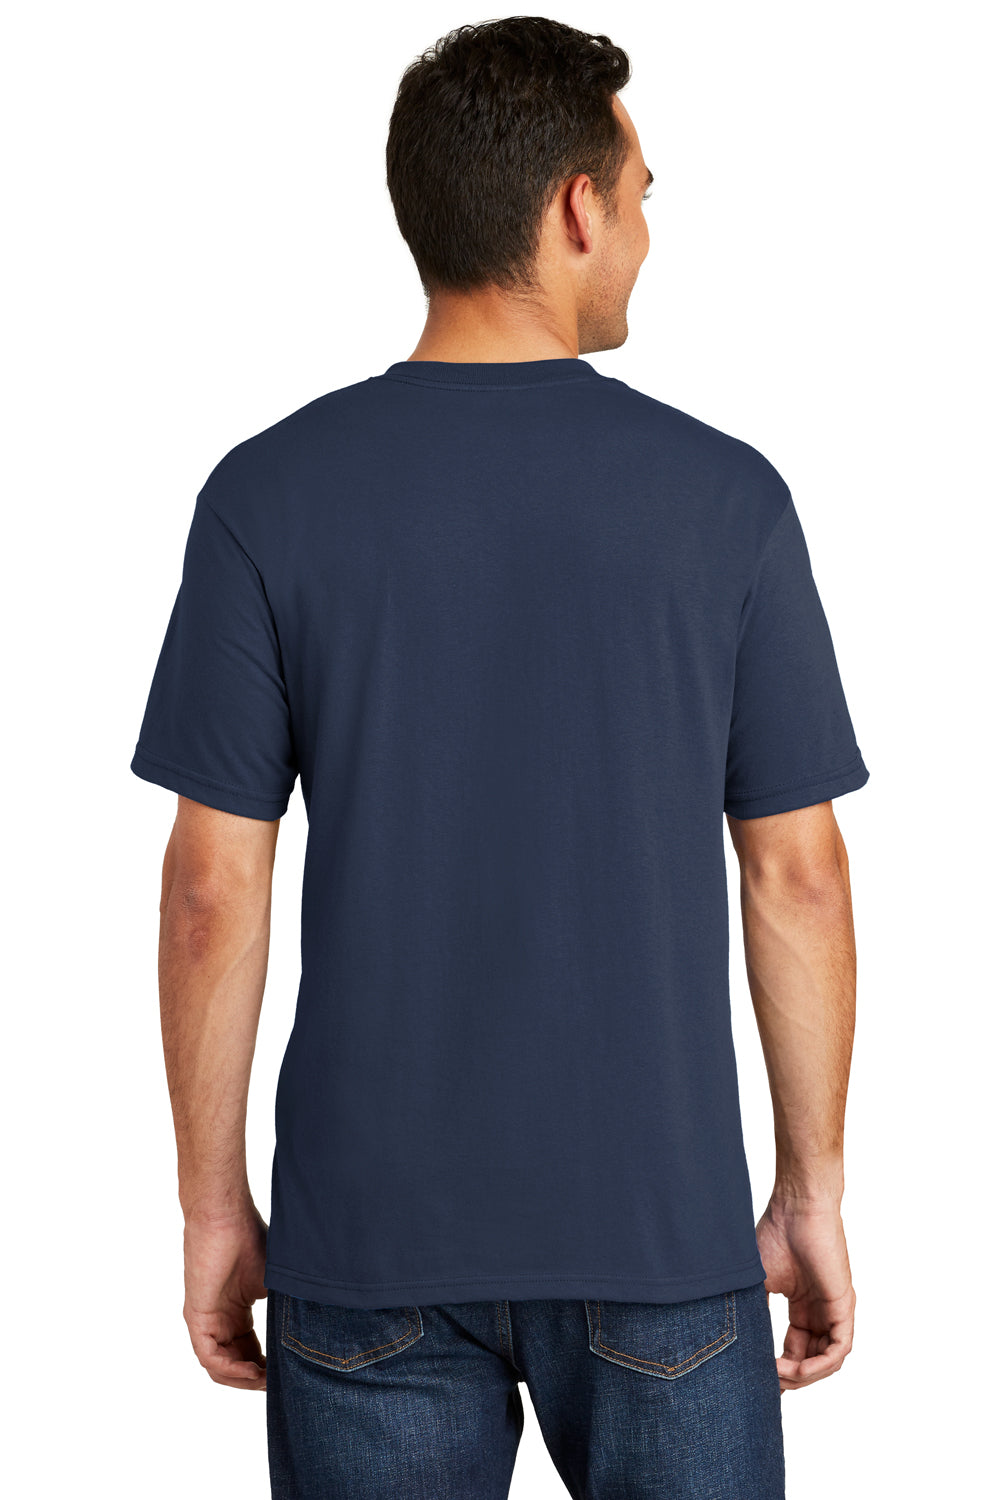 Port & Company USA100 Mens USA Made Short Sleeve Crewneck T-Shirt Navy Blue Back